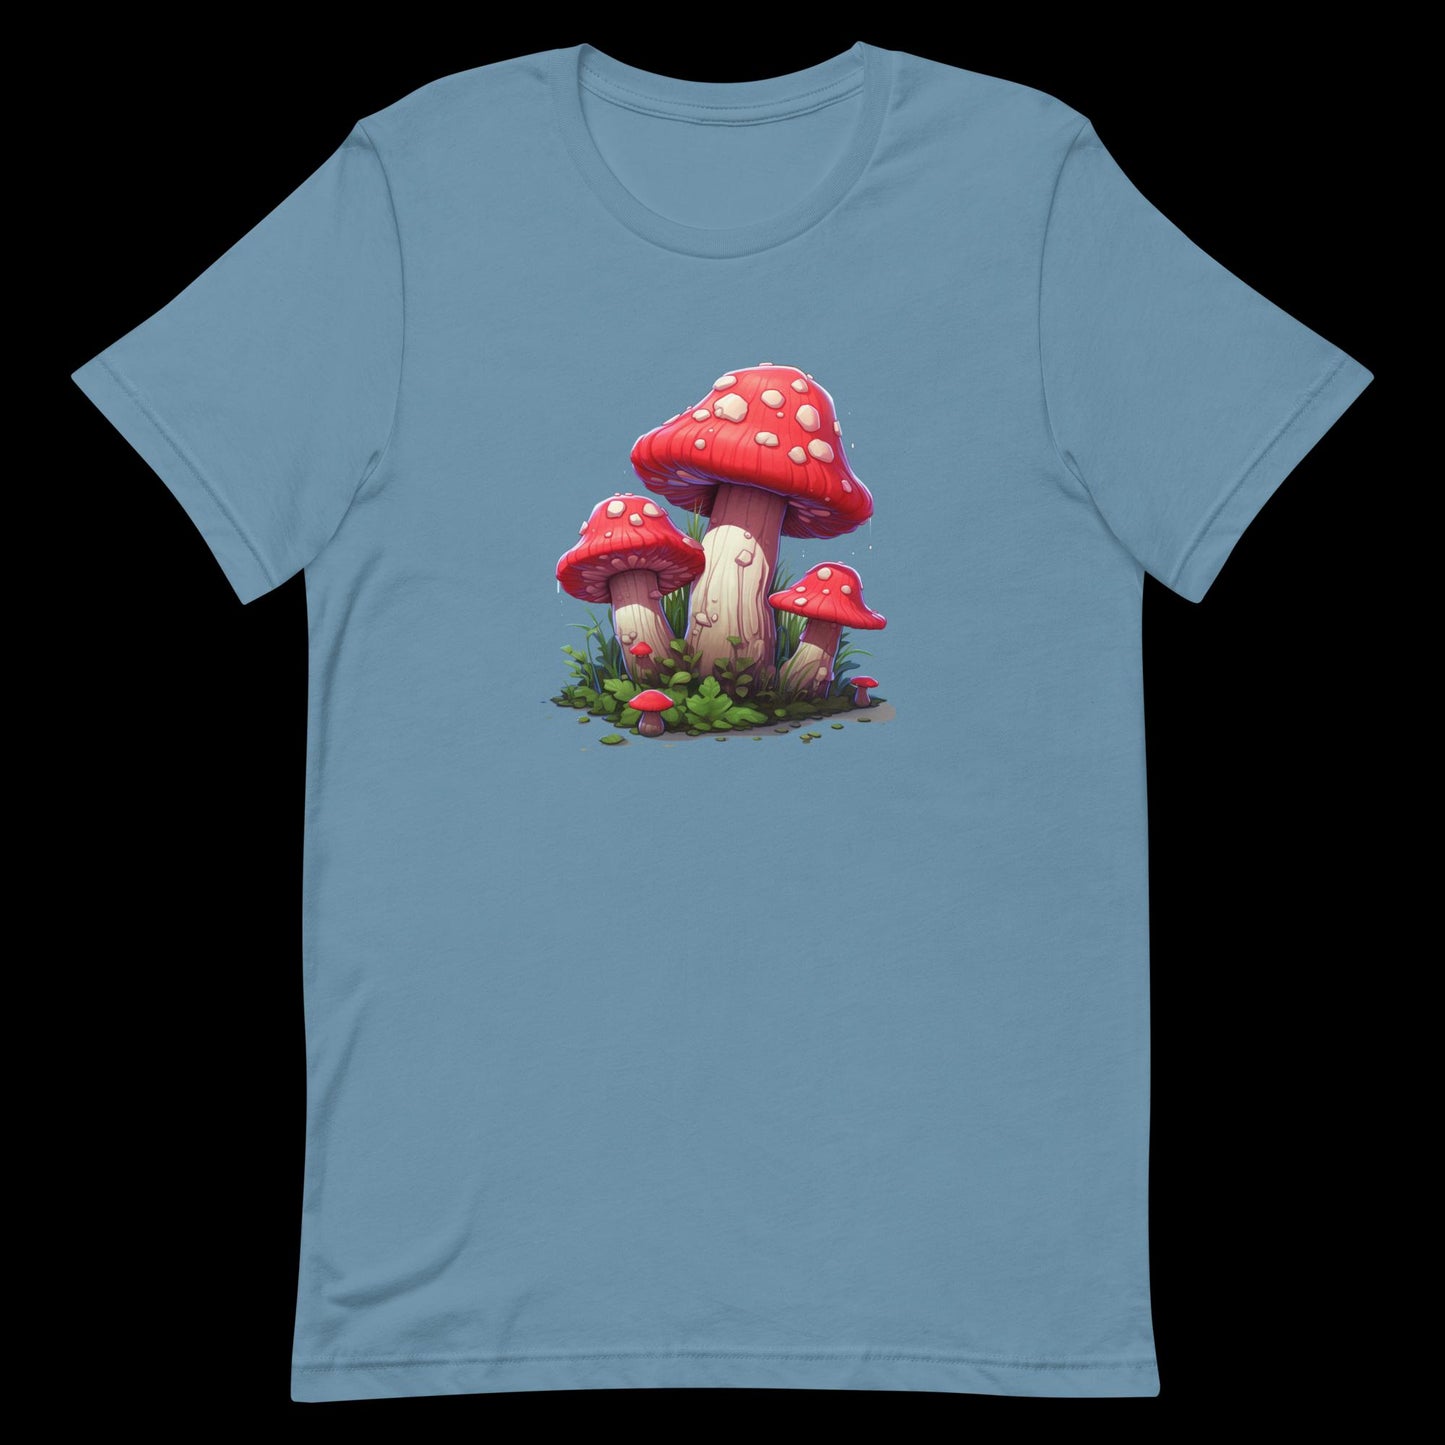 The Pixel Mushrooms Unisex T-Shirt